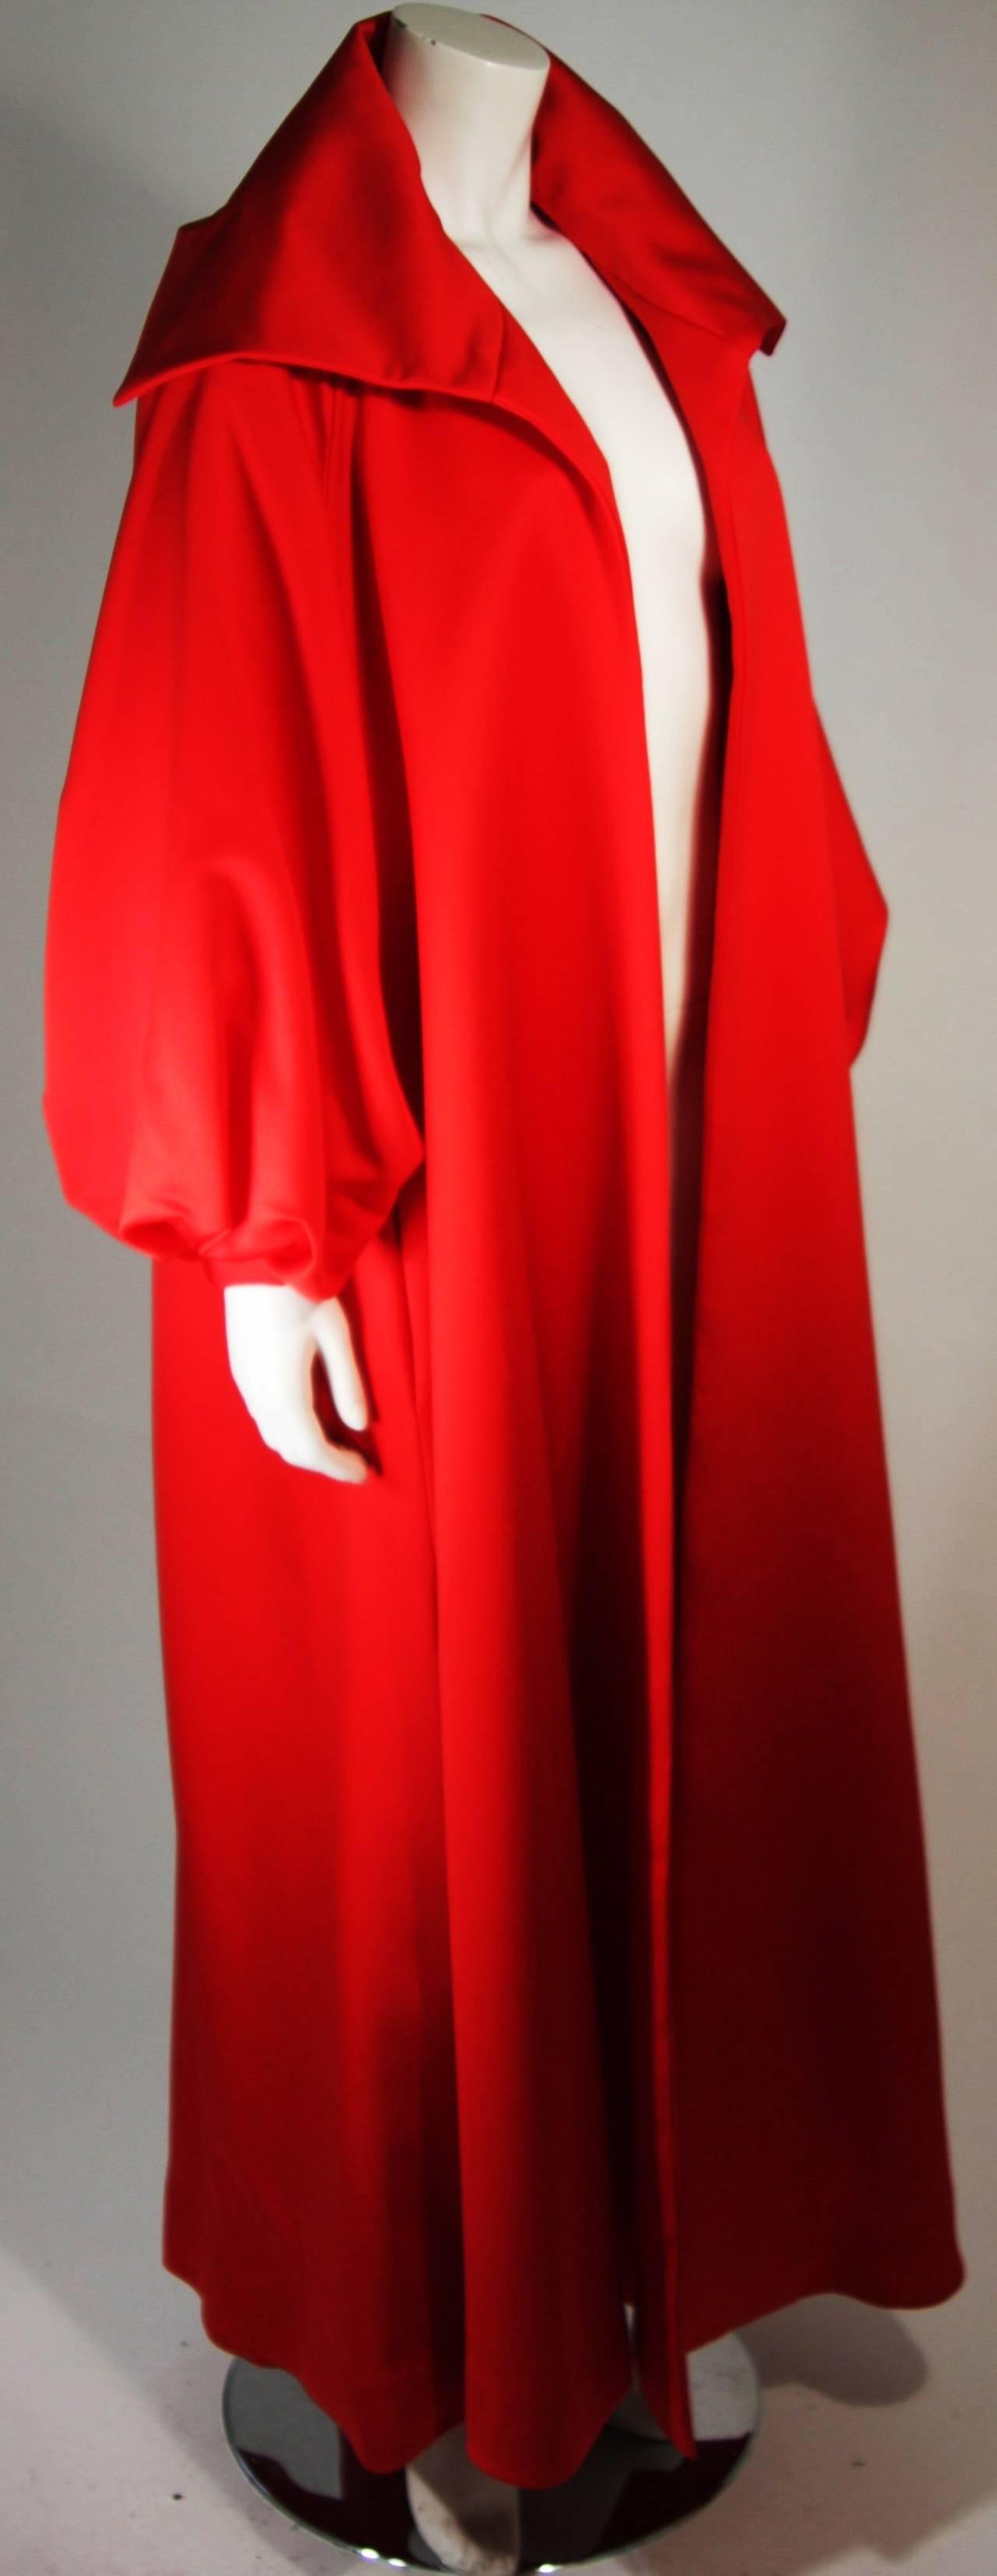 red opera dress